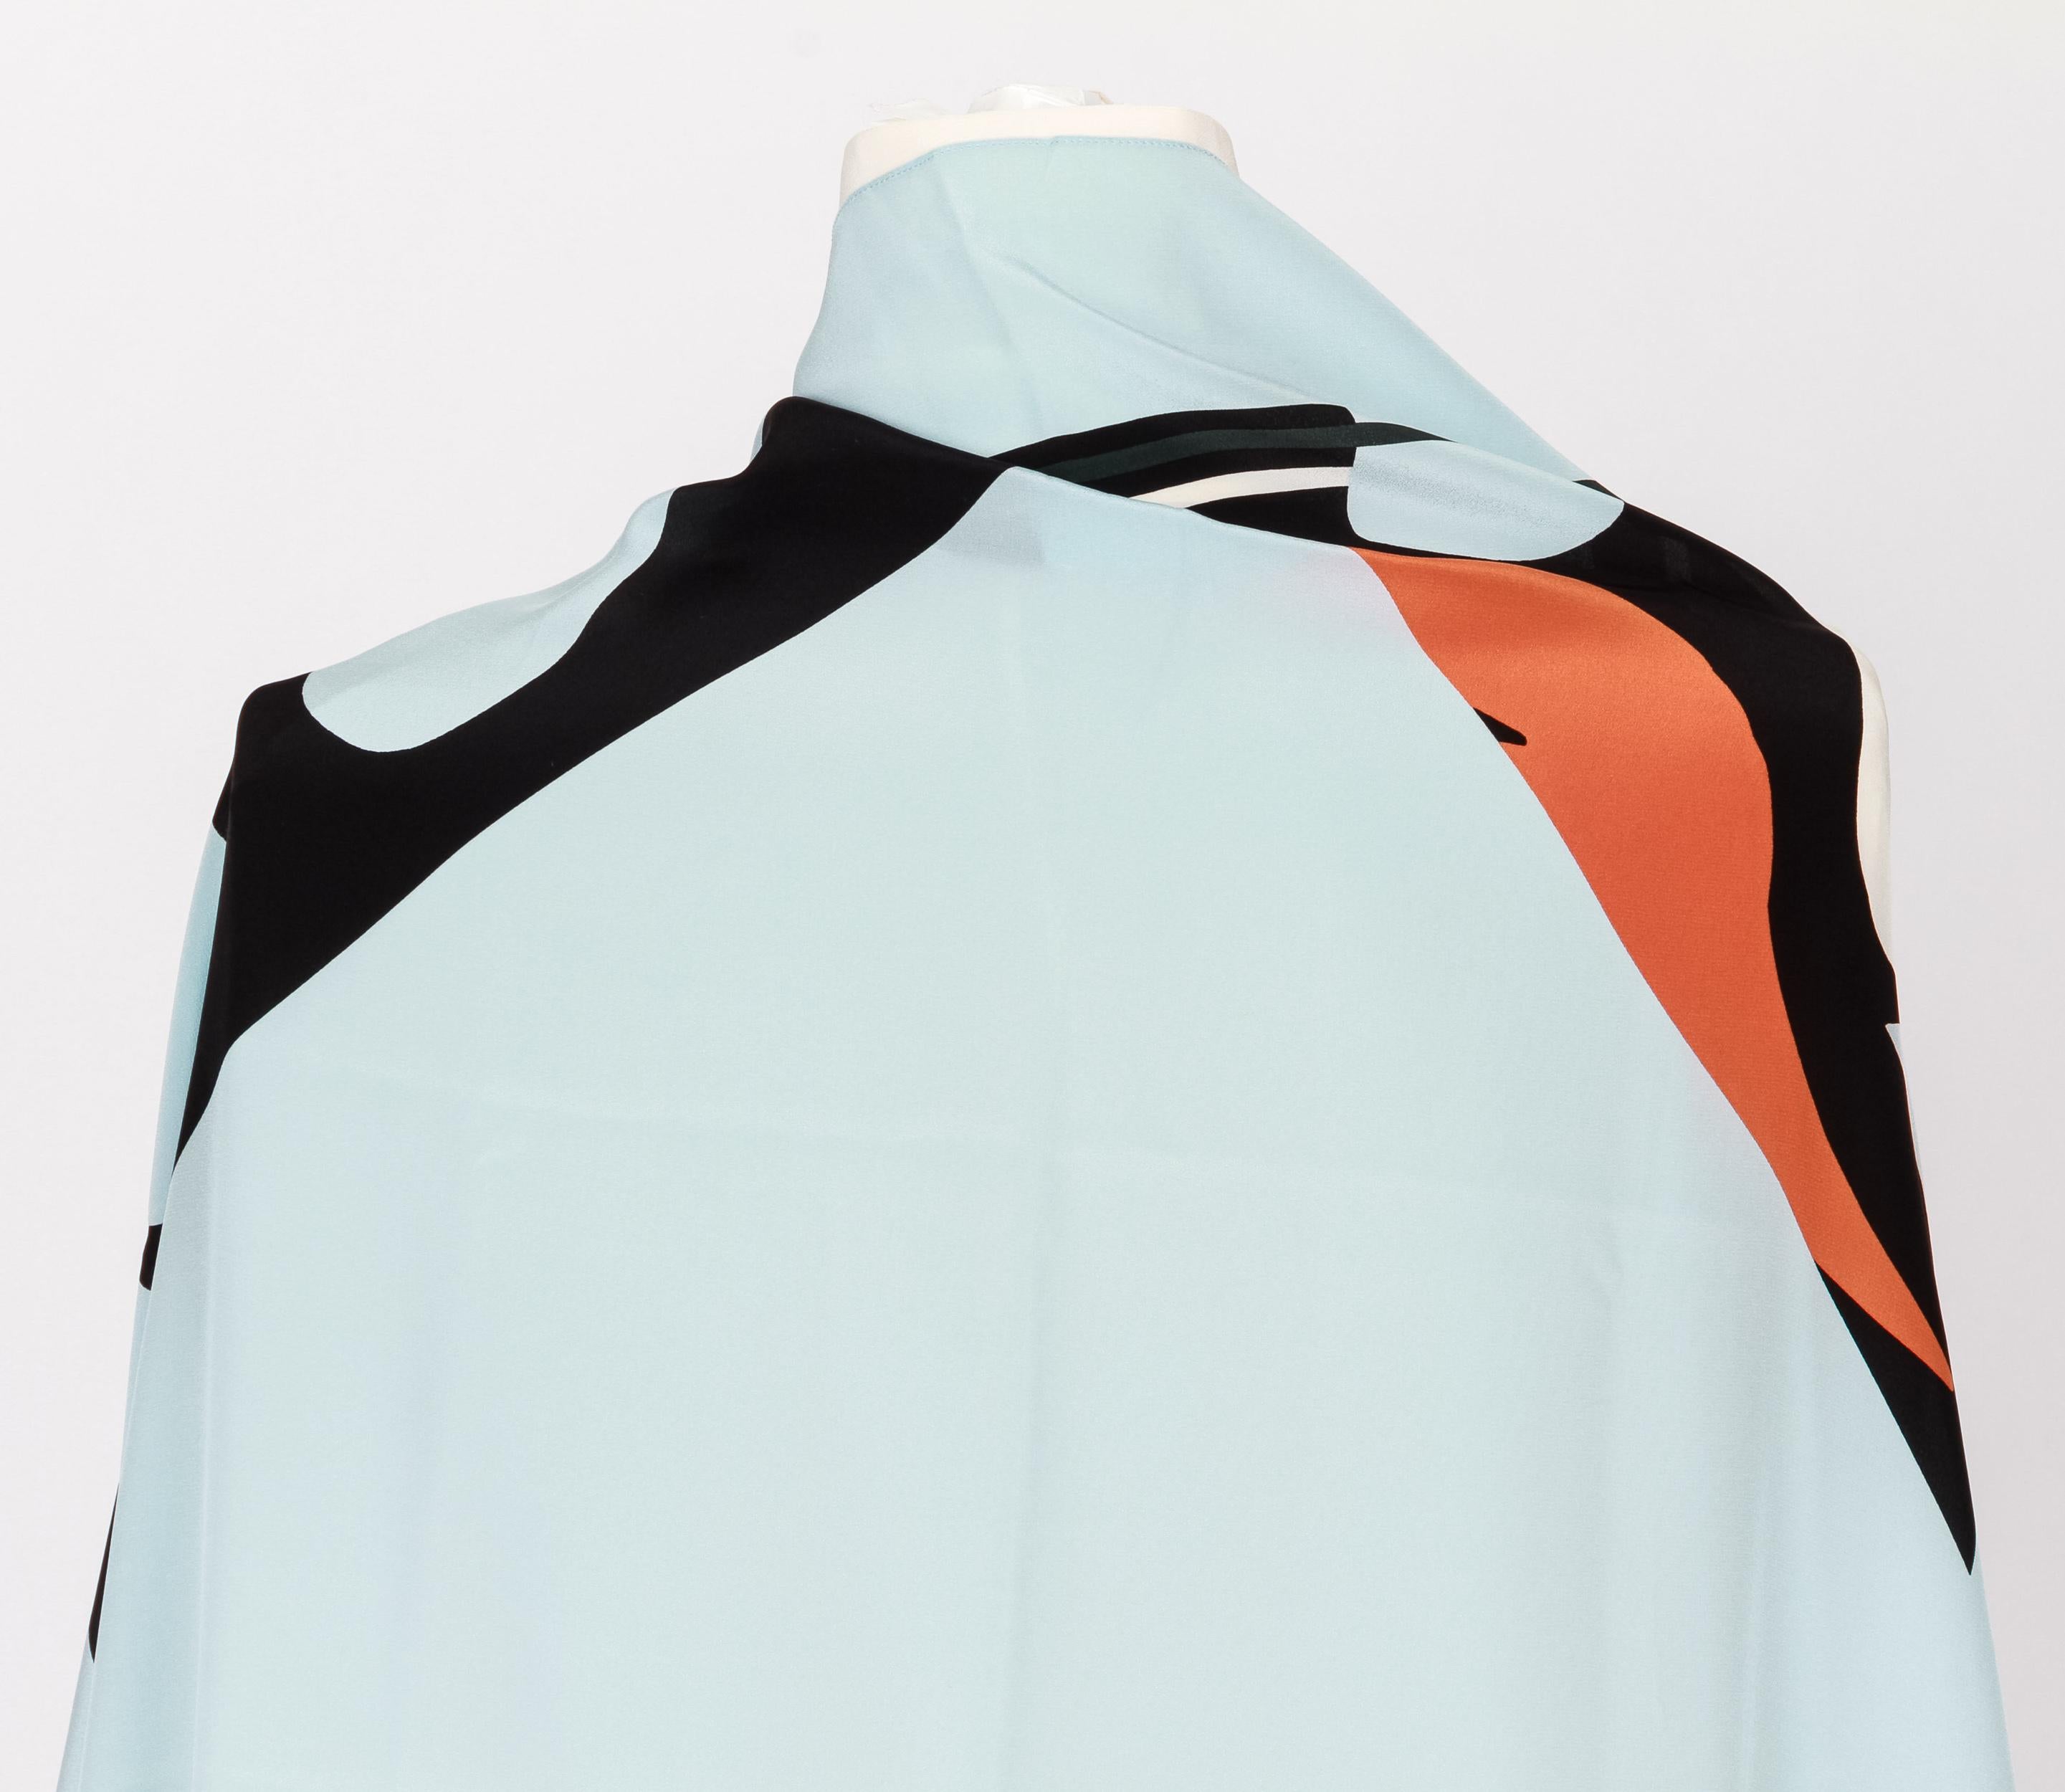 Dior brand new oversize shawl celeste, black, white abstract design,
100% silk
54